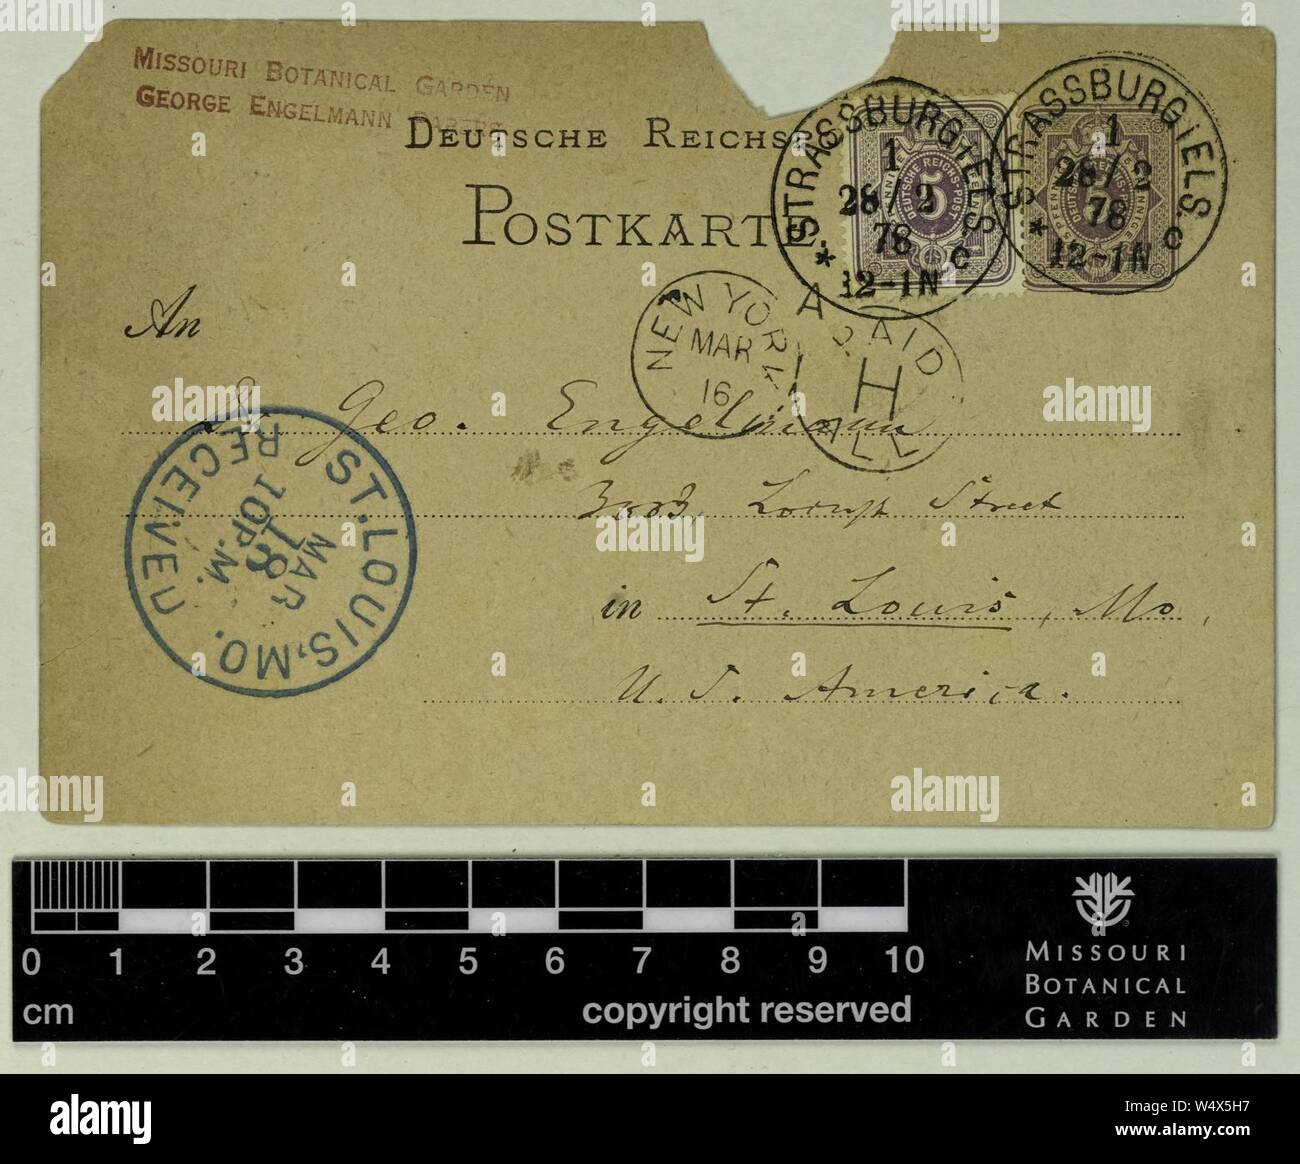 Correspondence - Bary (Anton) and Engelmann (George) (Feb 28, 1878 (1) verso) Stock Photo